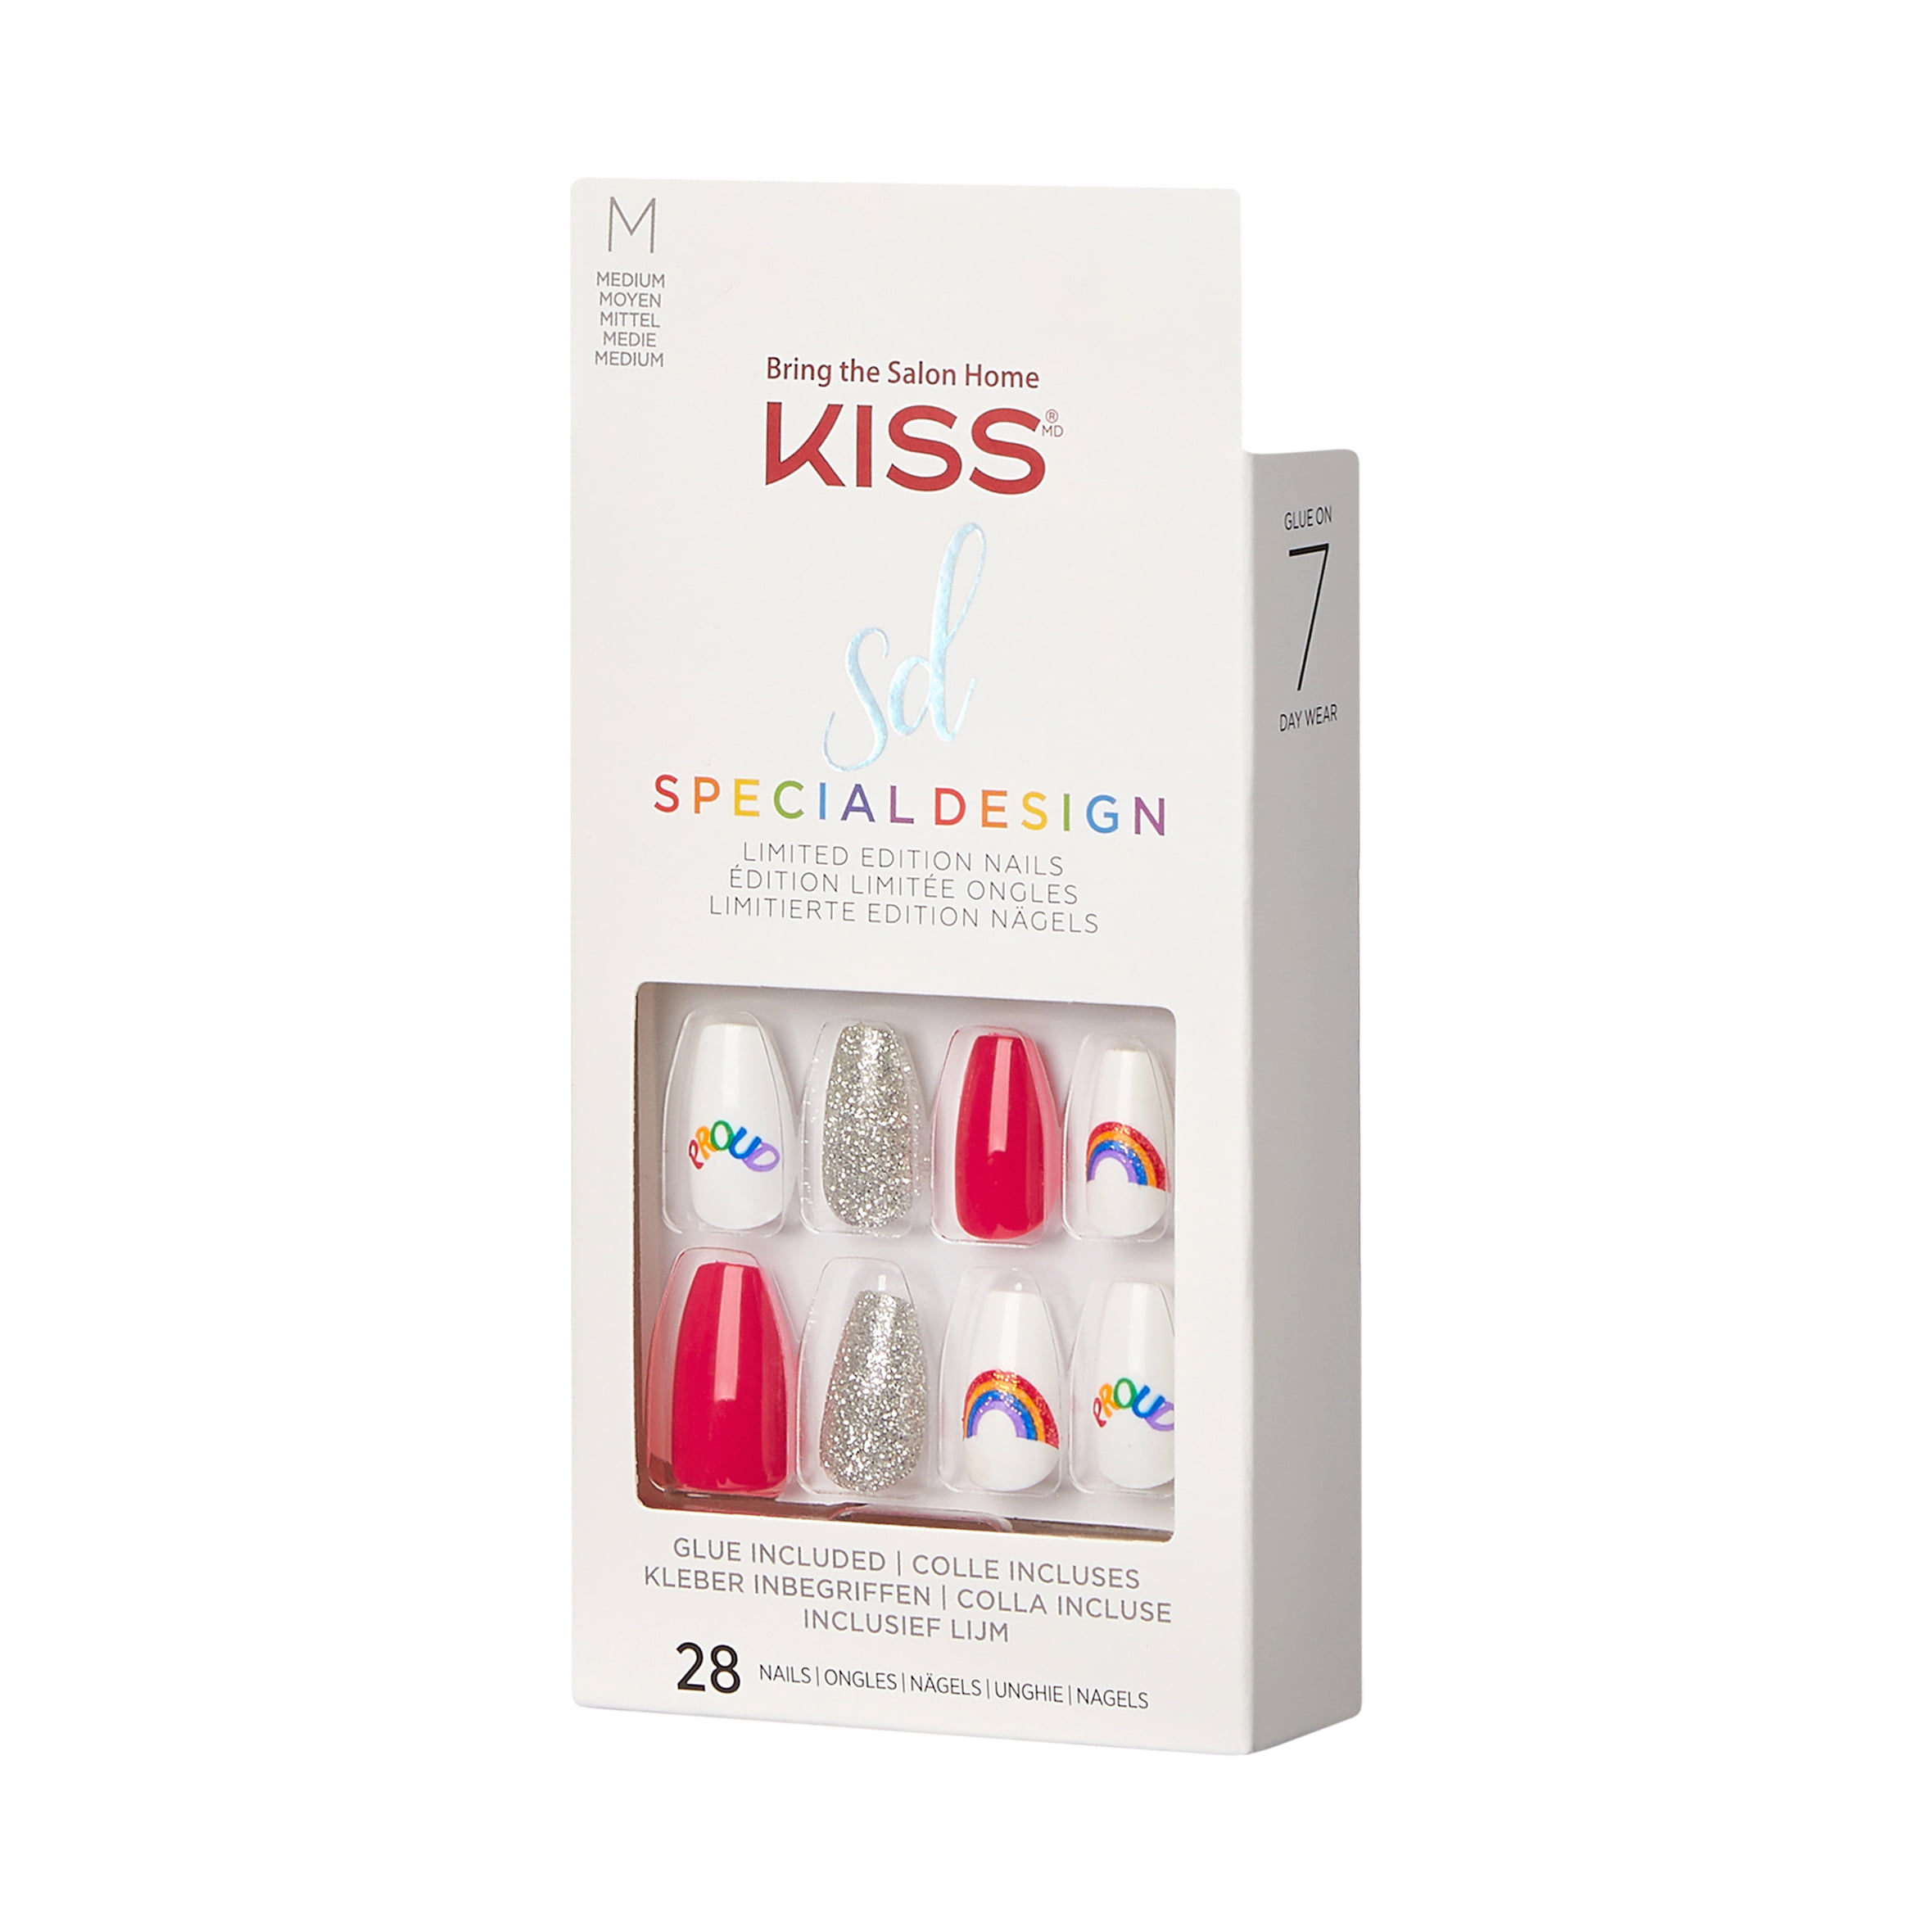 KISS Voguish Fantasy Fake Nails, 'Paradise', 28 Count - Walmart.com